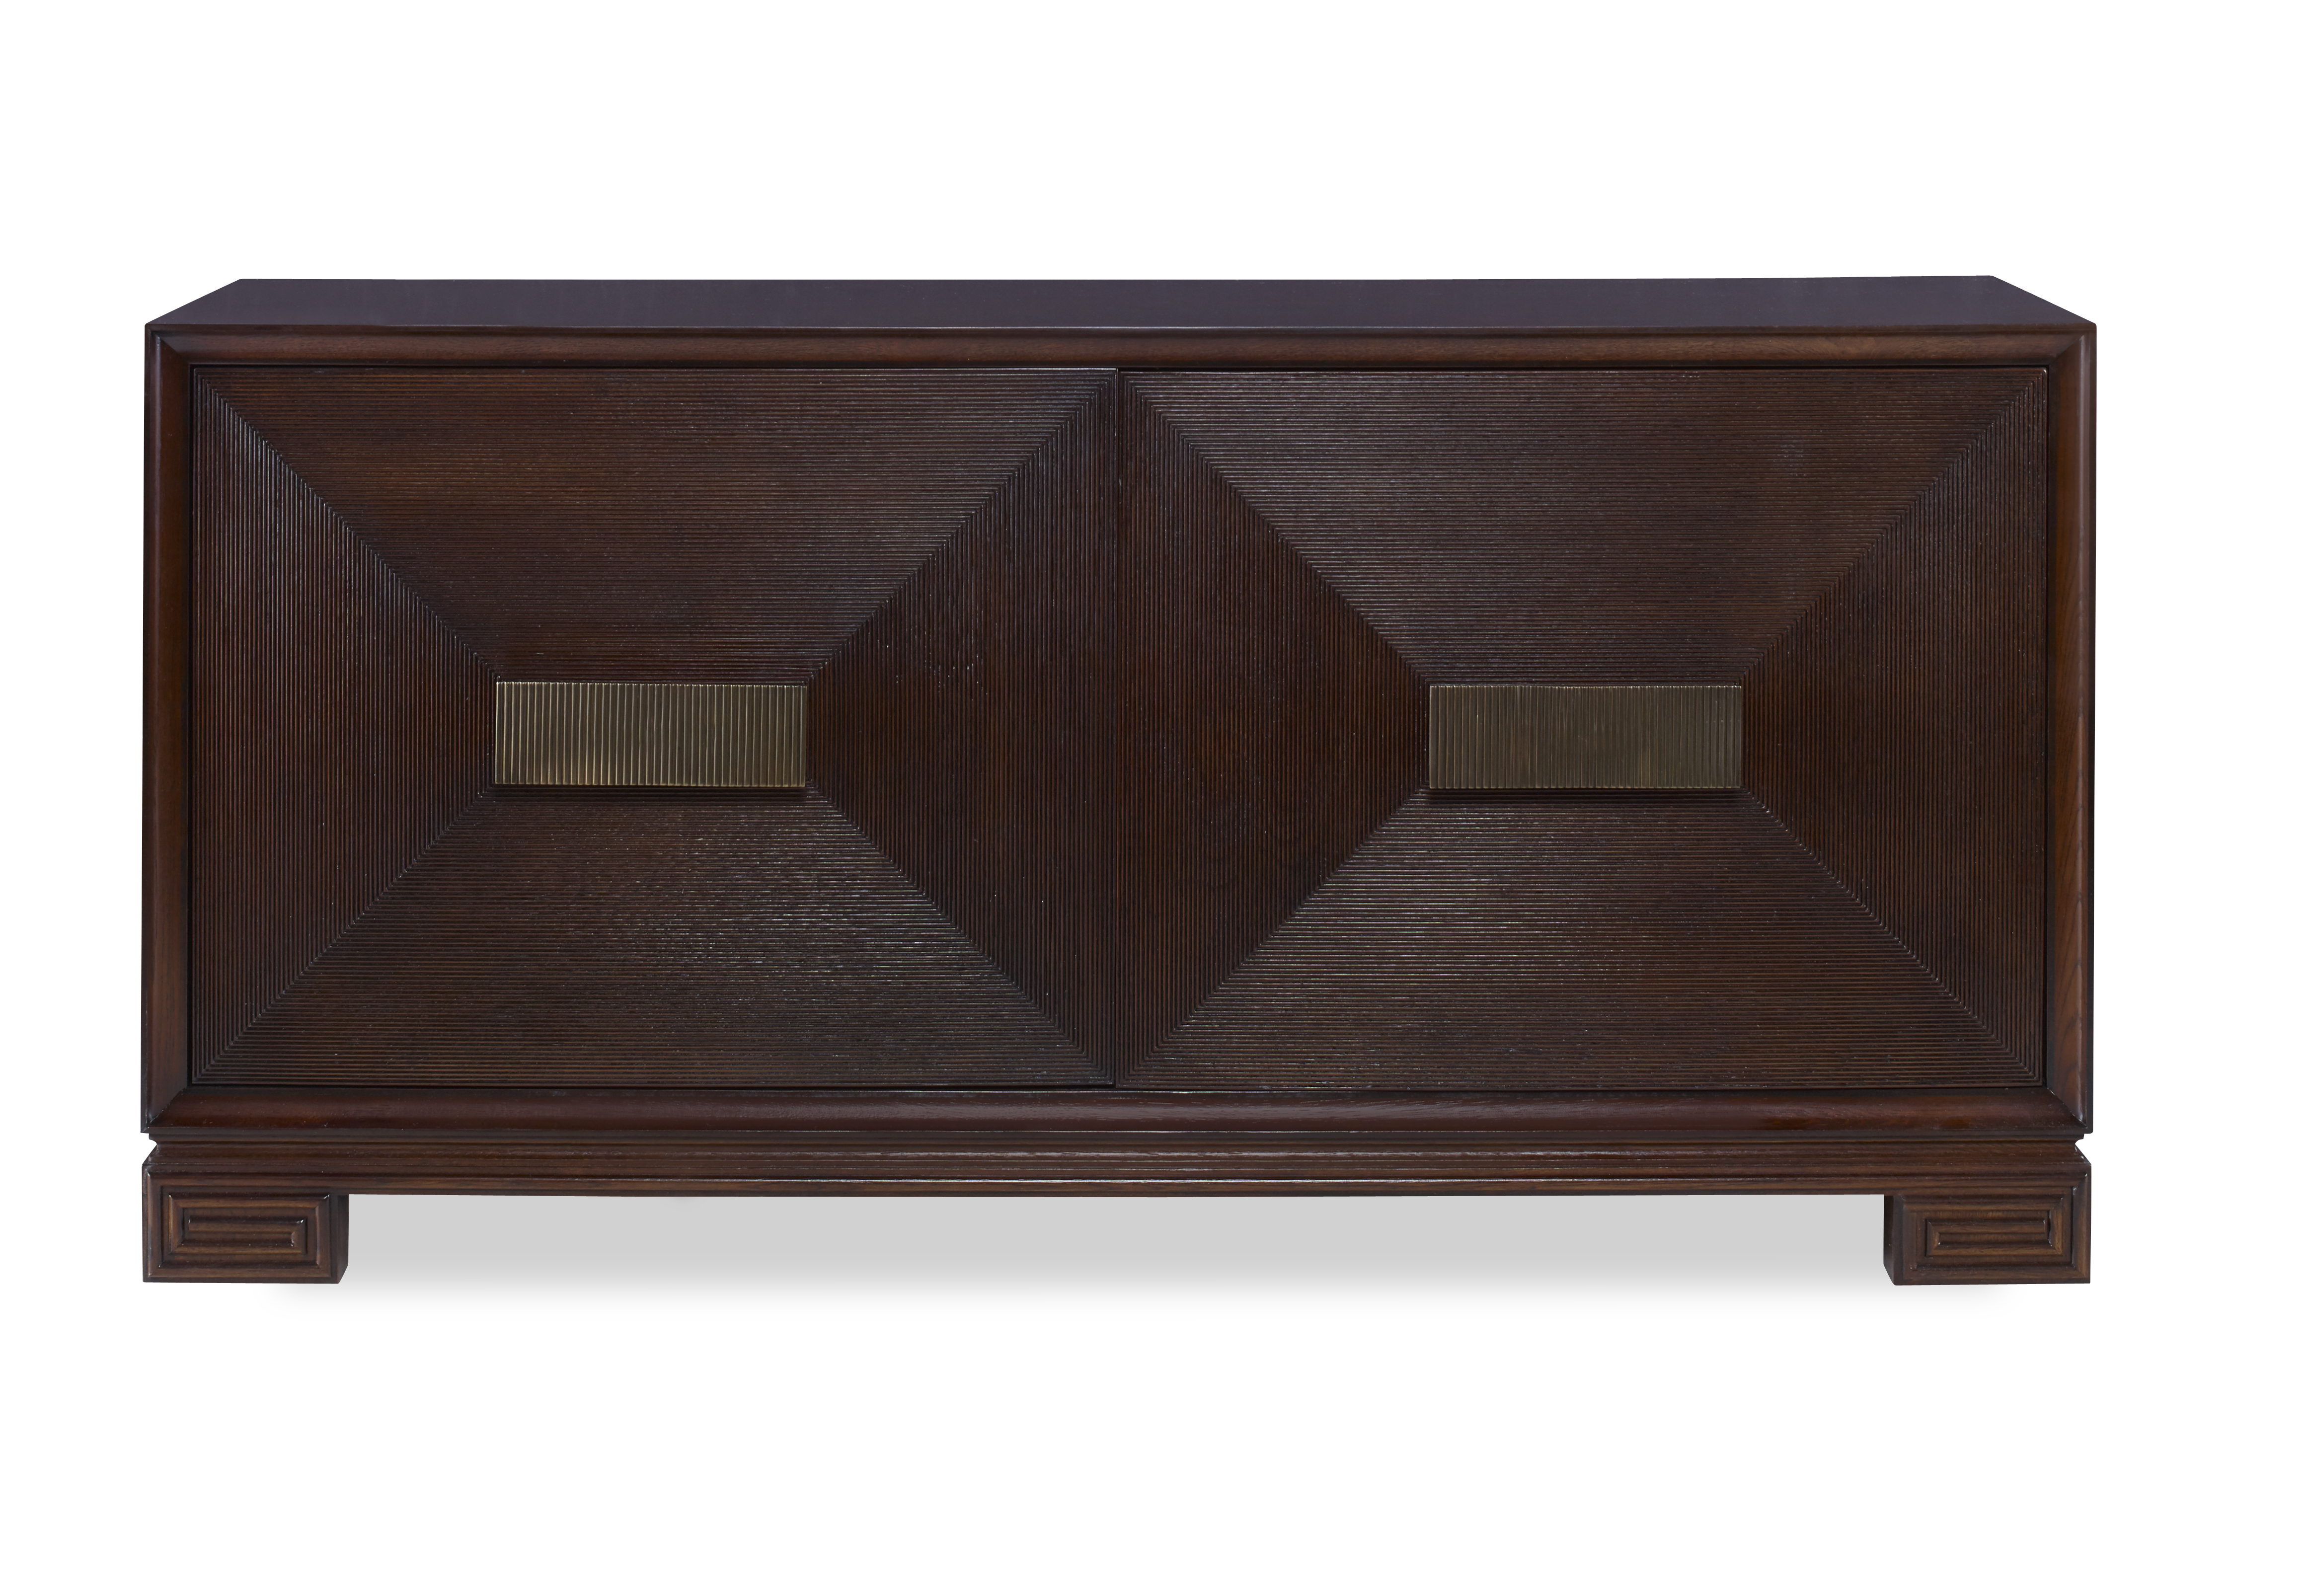 Century Furniture Oscar door chest